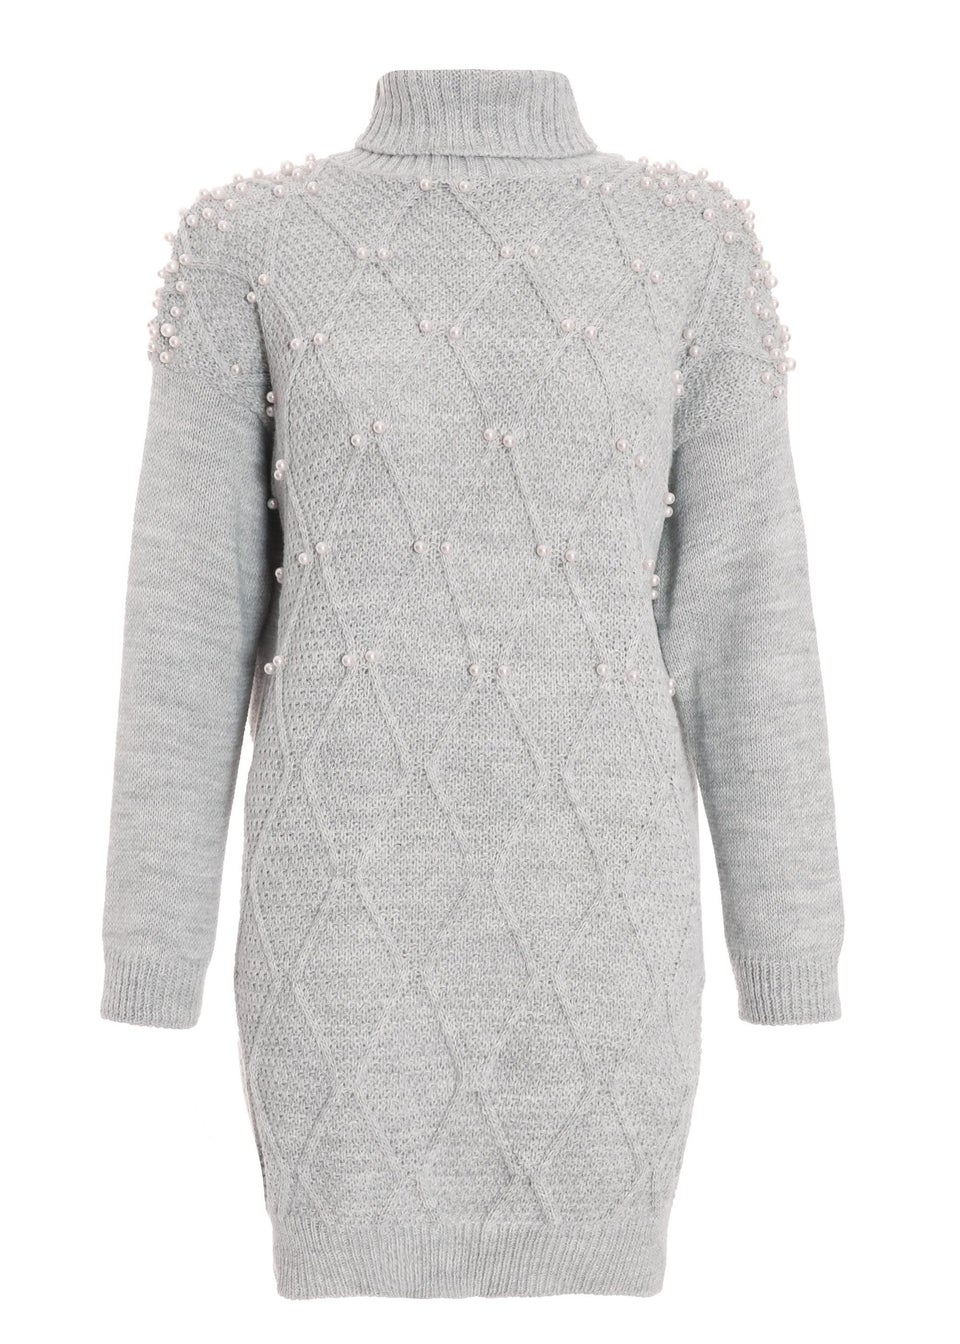 Quiz Grey Knitted Pearl Embellished Jumper Dress